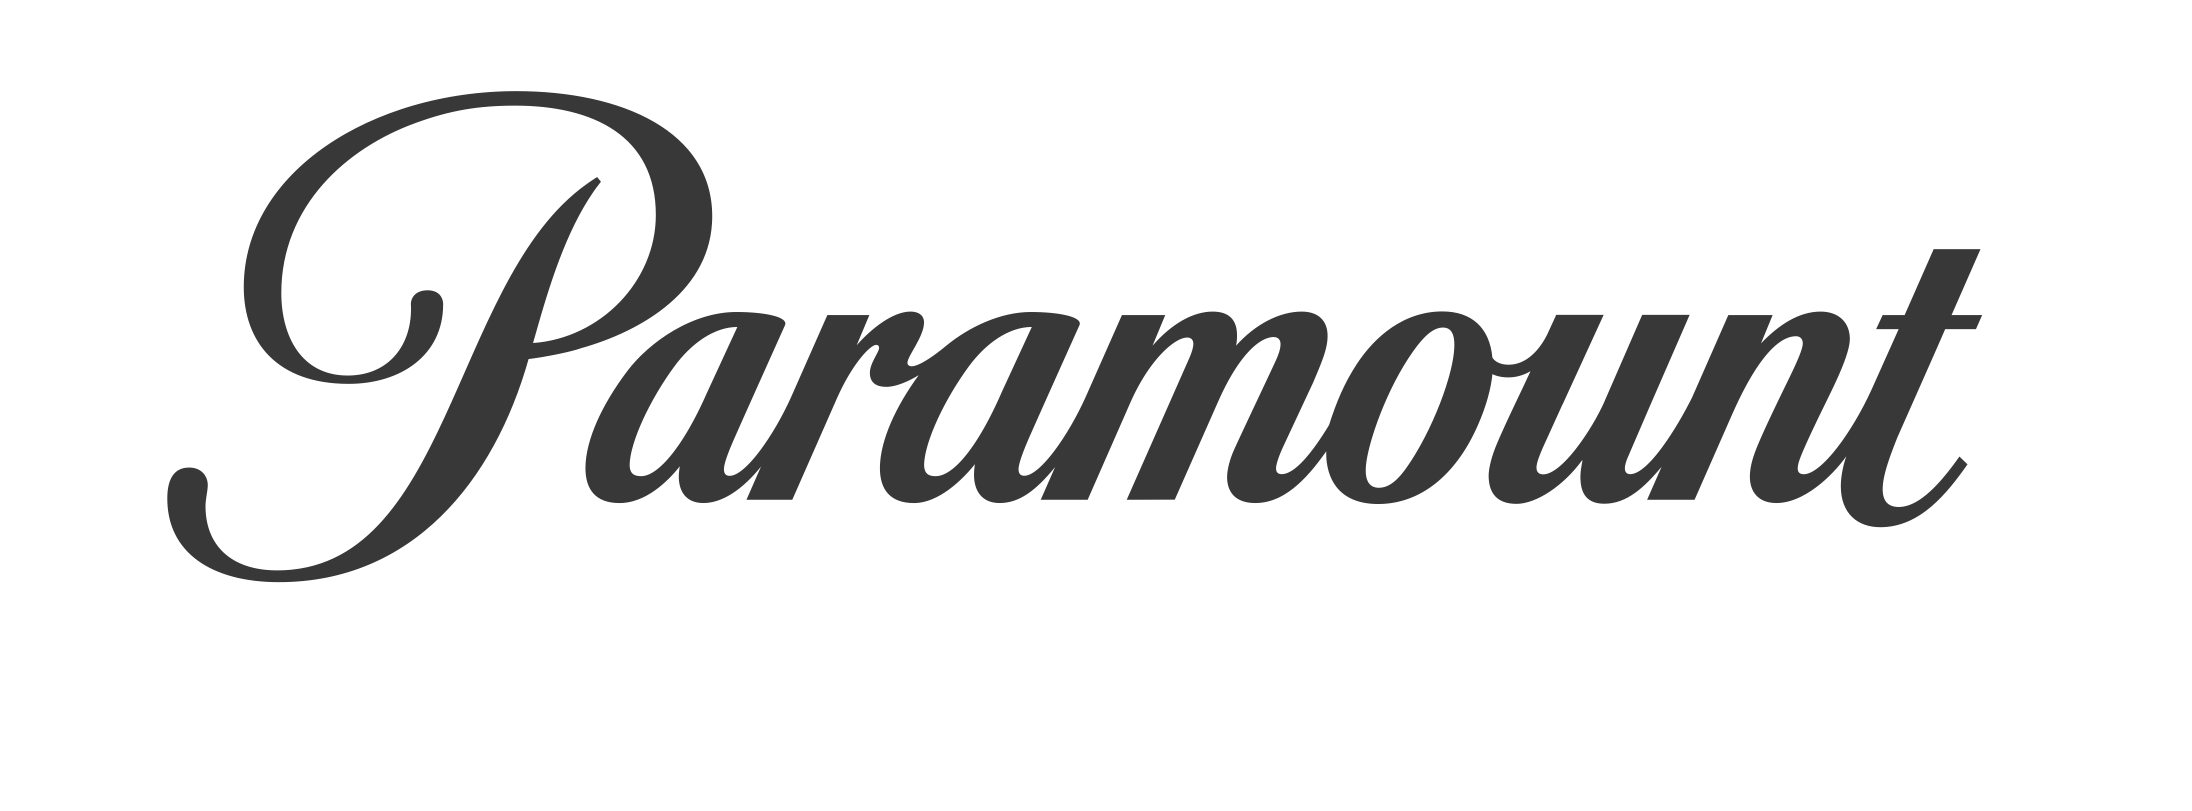 Paramount Logo - new PARAMOUNT logo by Ian Brignell | Ian Brignell Lettering Design